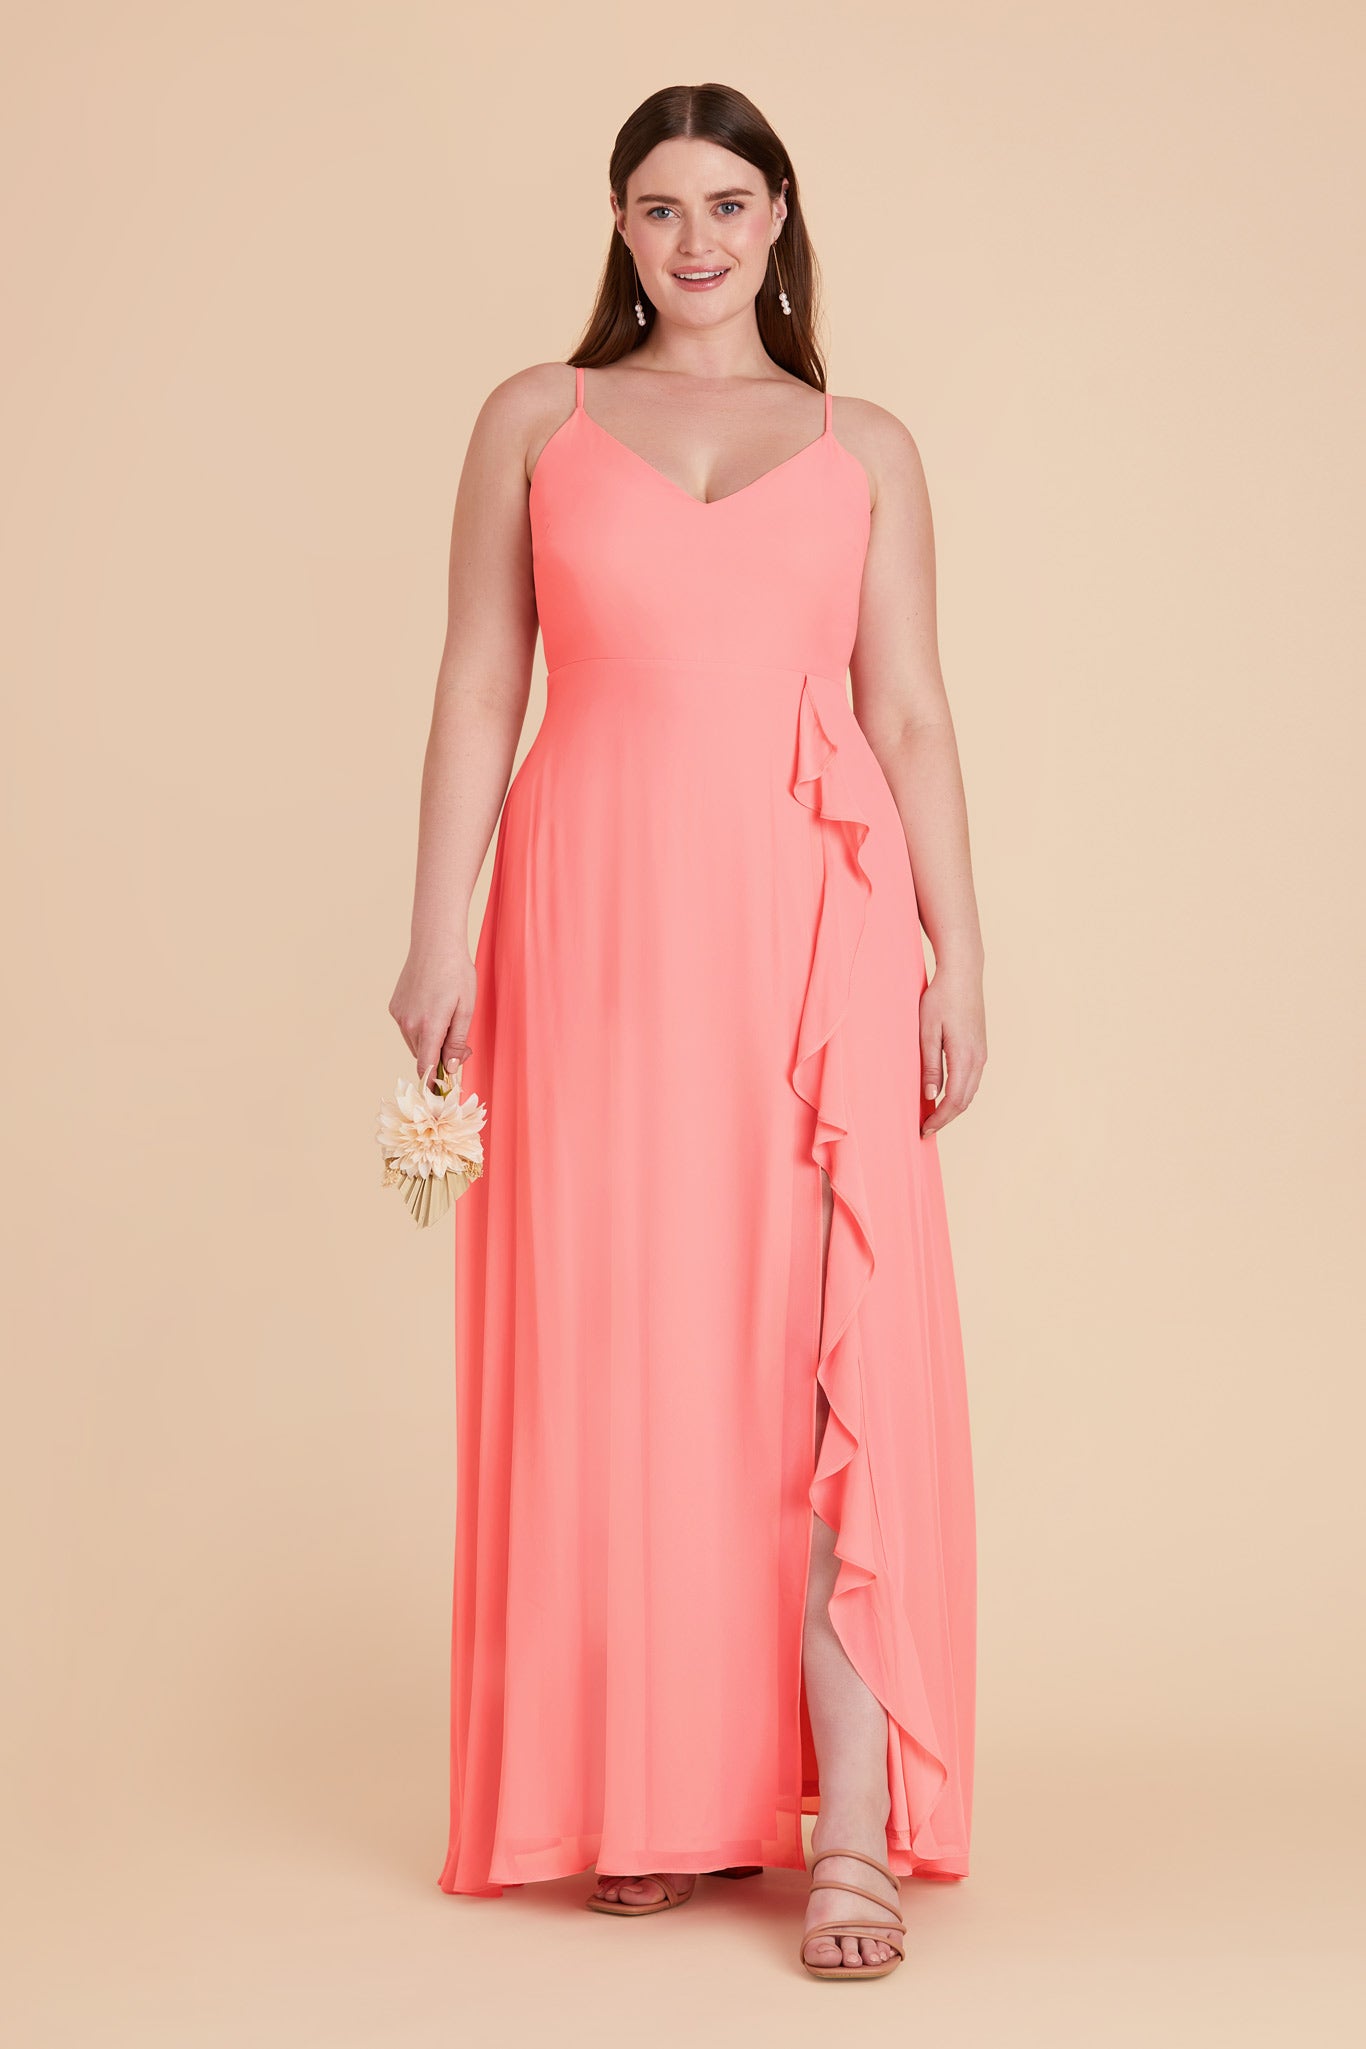 Coral Pink Theresa Chiffon Dress by Birdy Grey